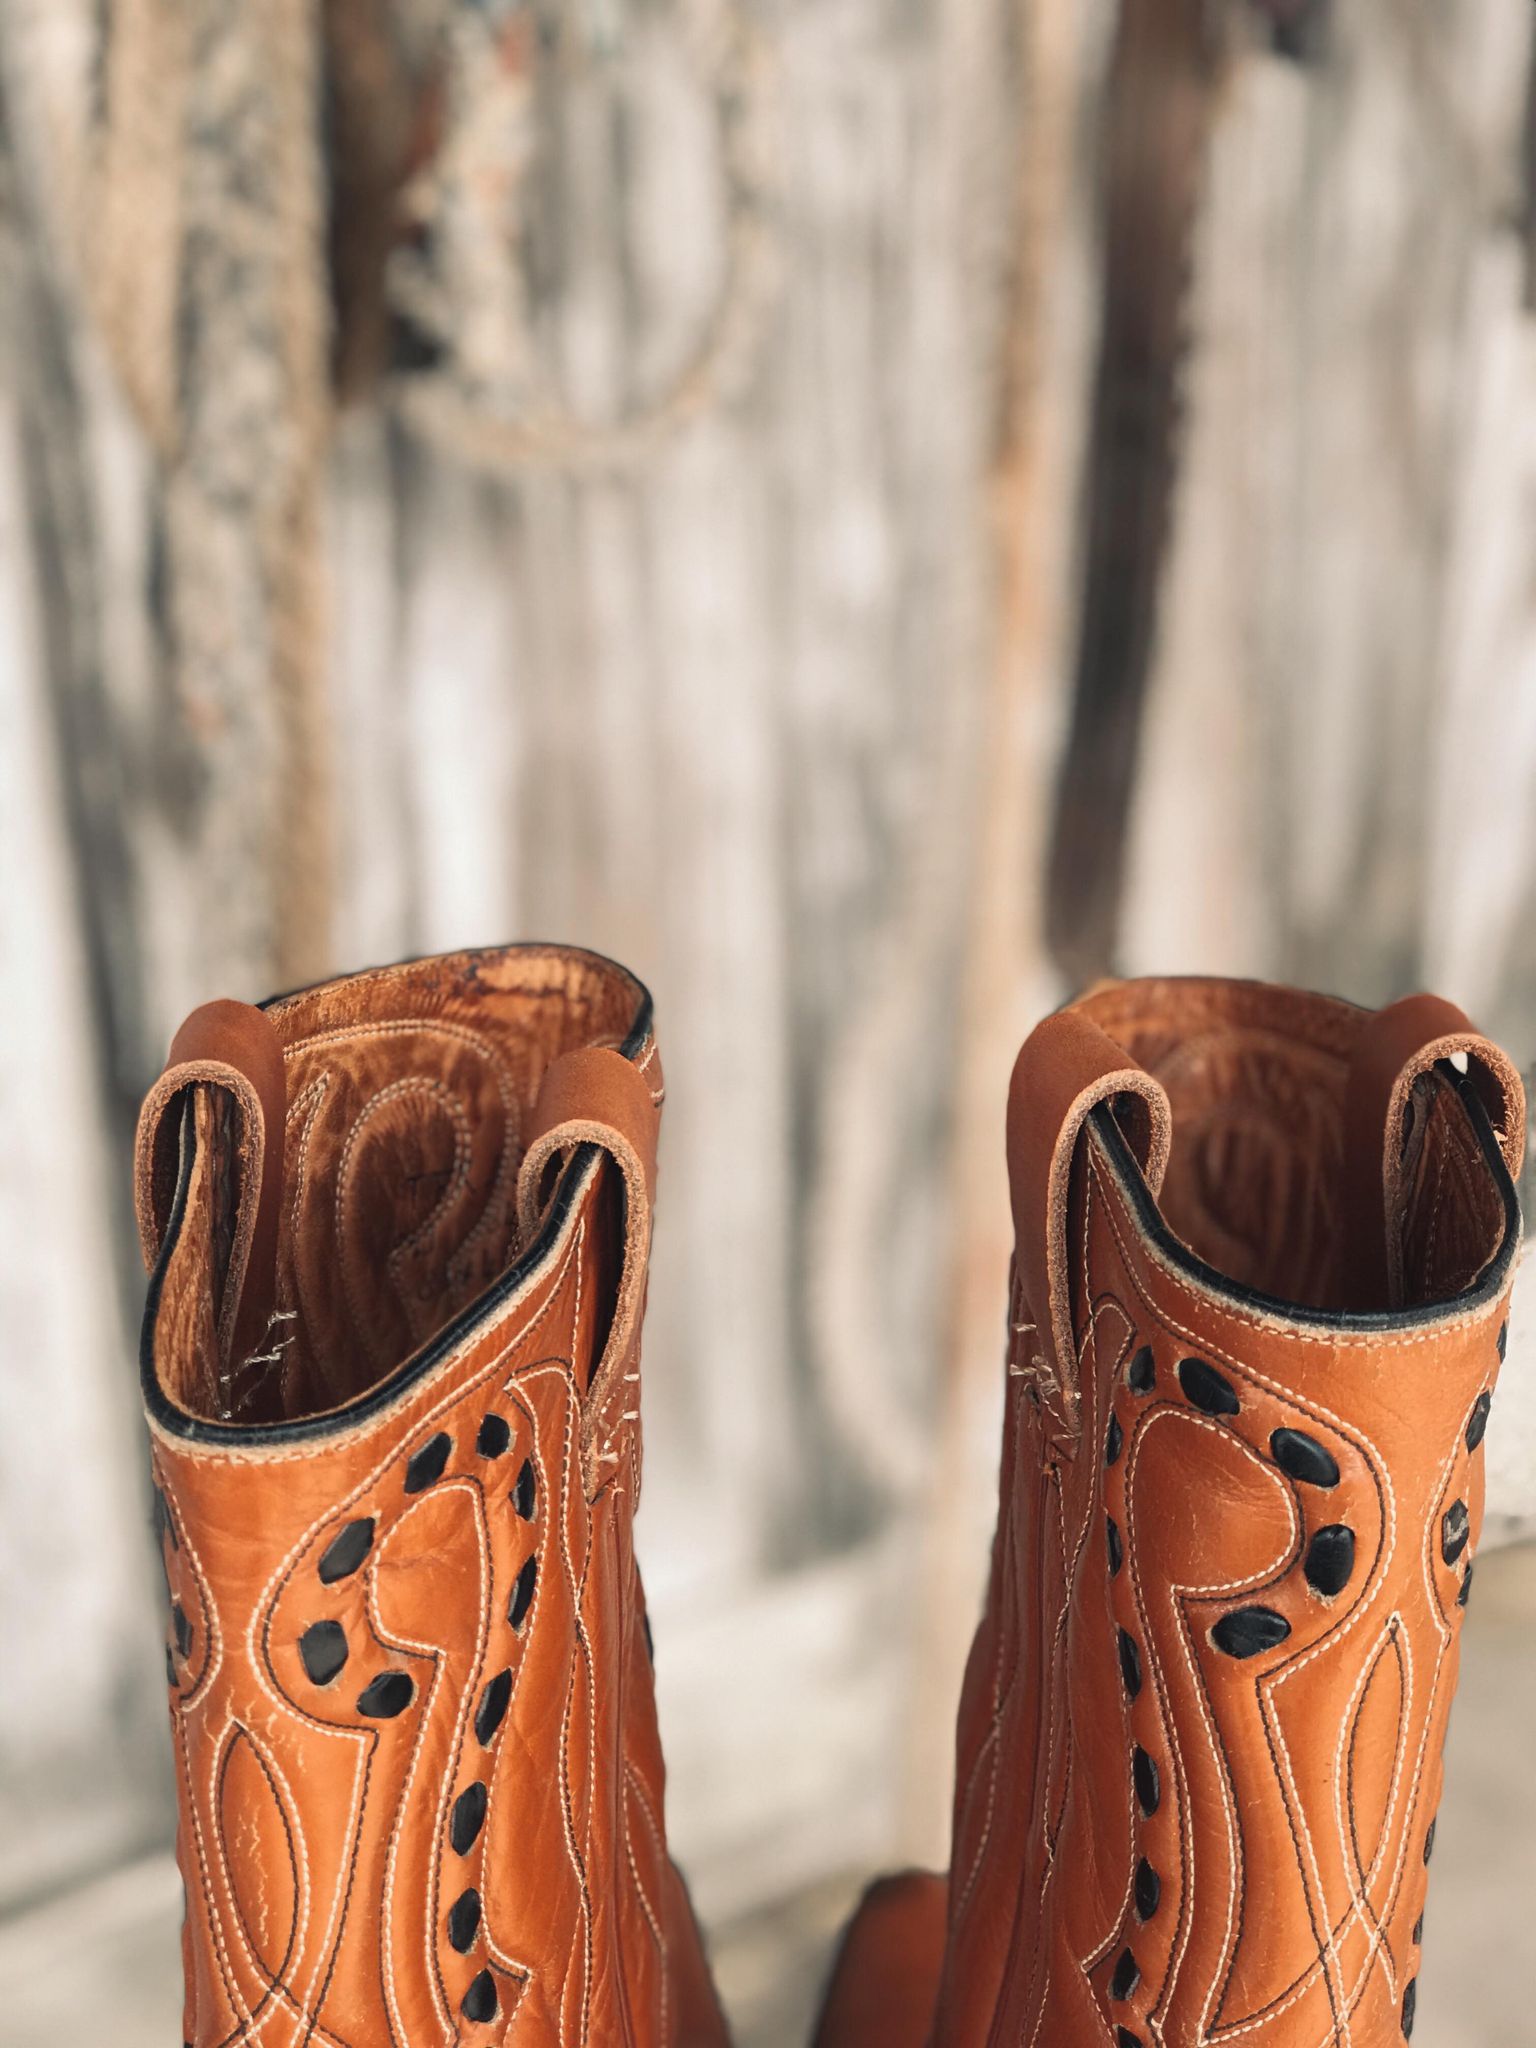 Vintage Texas Brand Cowboy Boots